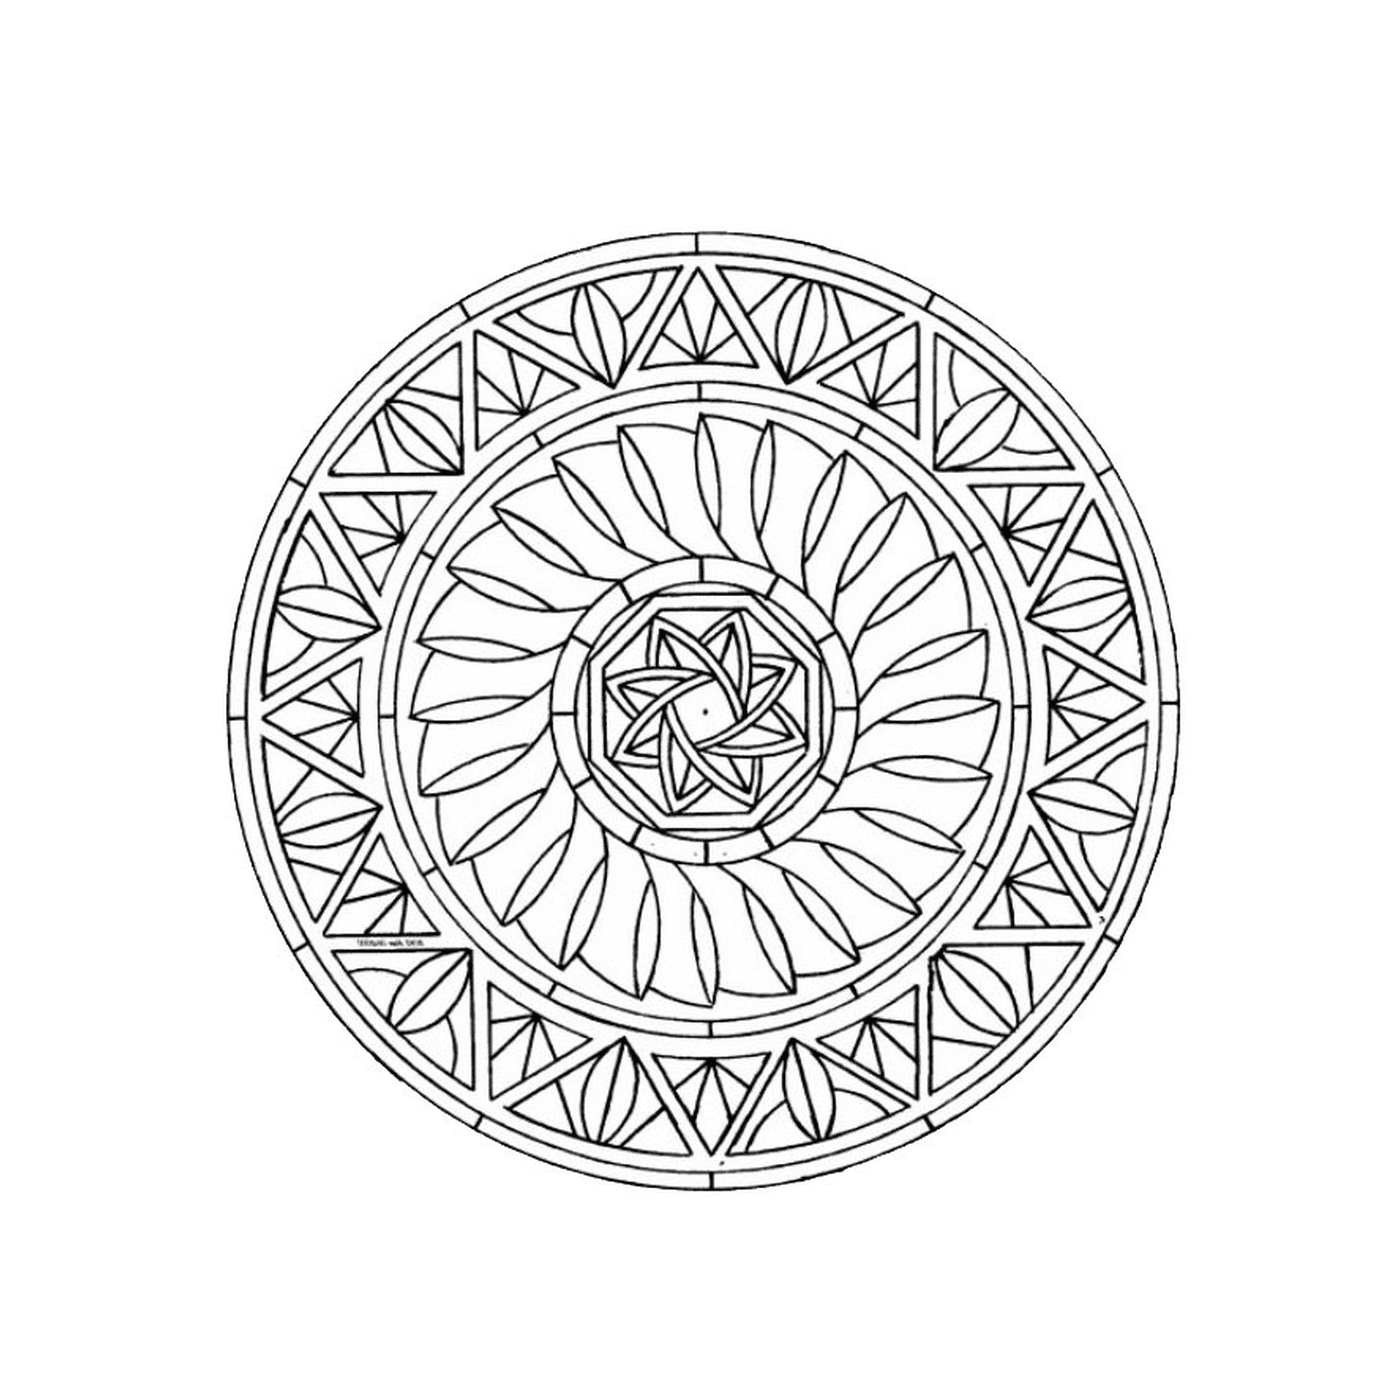  Mandala con formas geométricas 